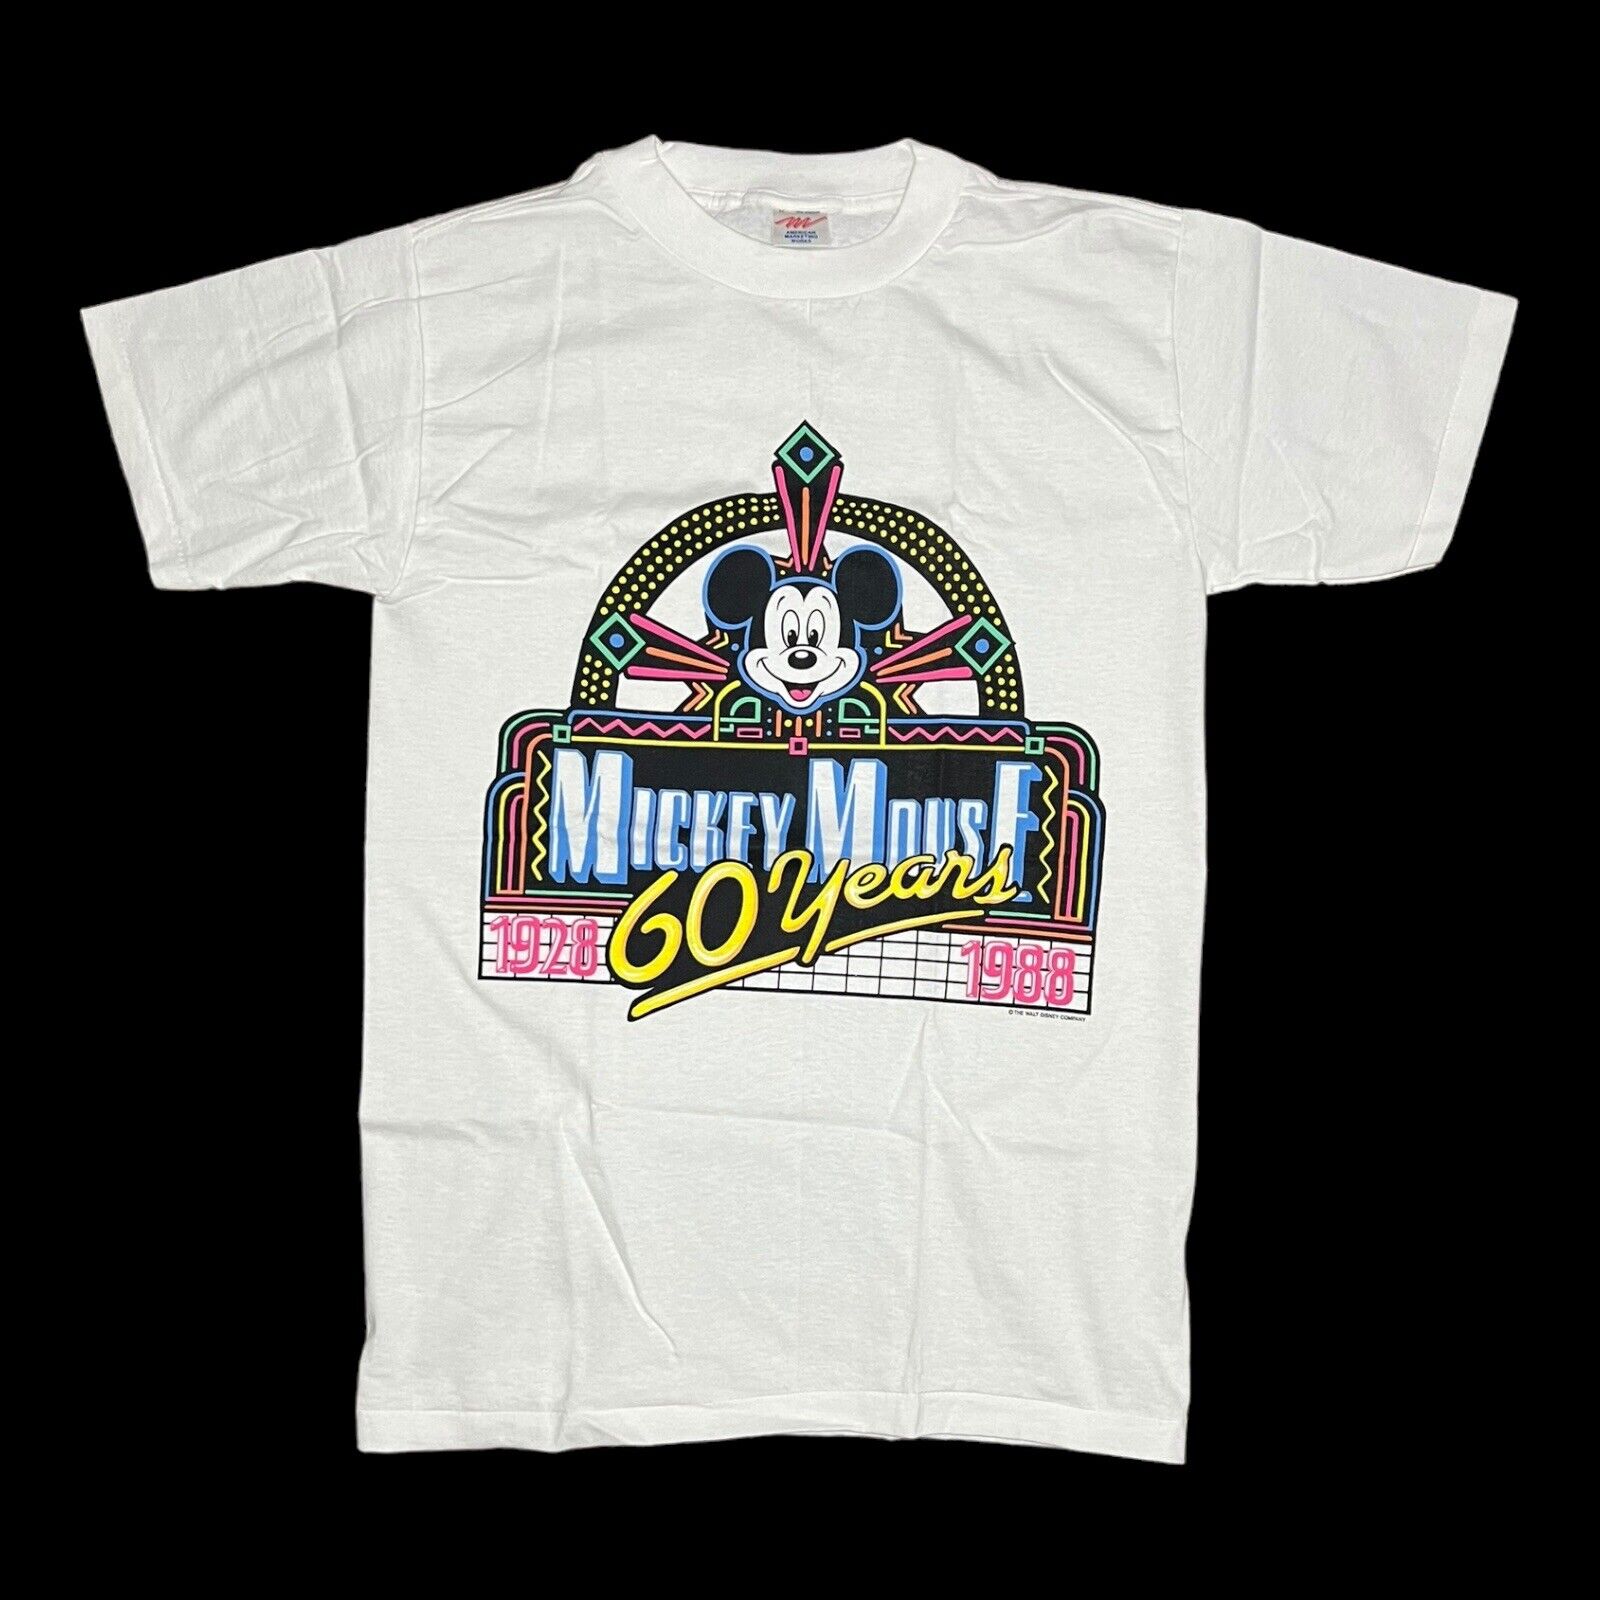 VTG 1988 Disney Mickey Mouse 60 Years 1928-1988 White T Shirt Sz M